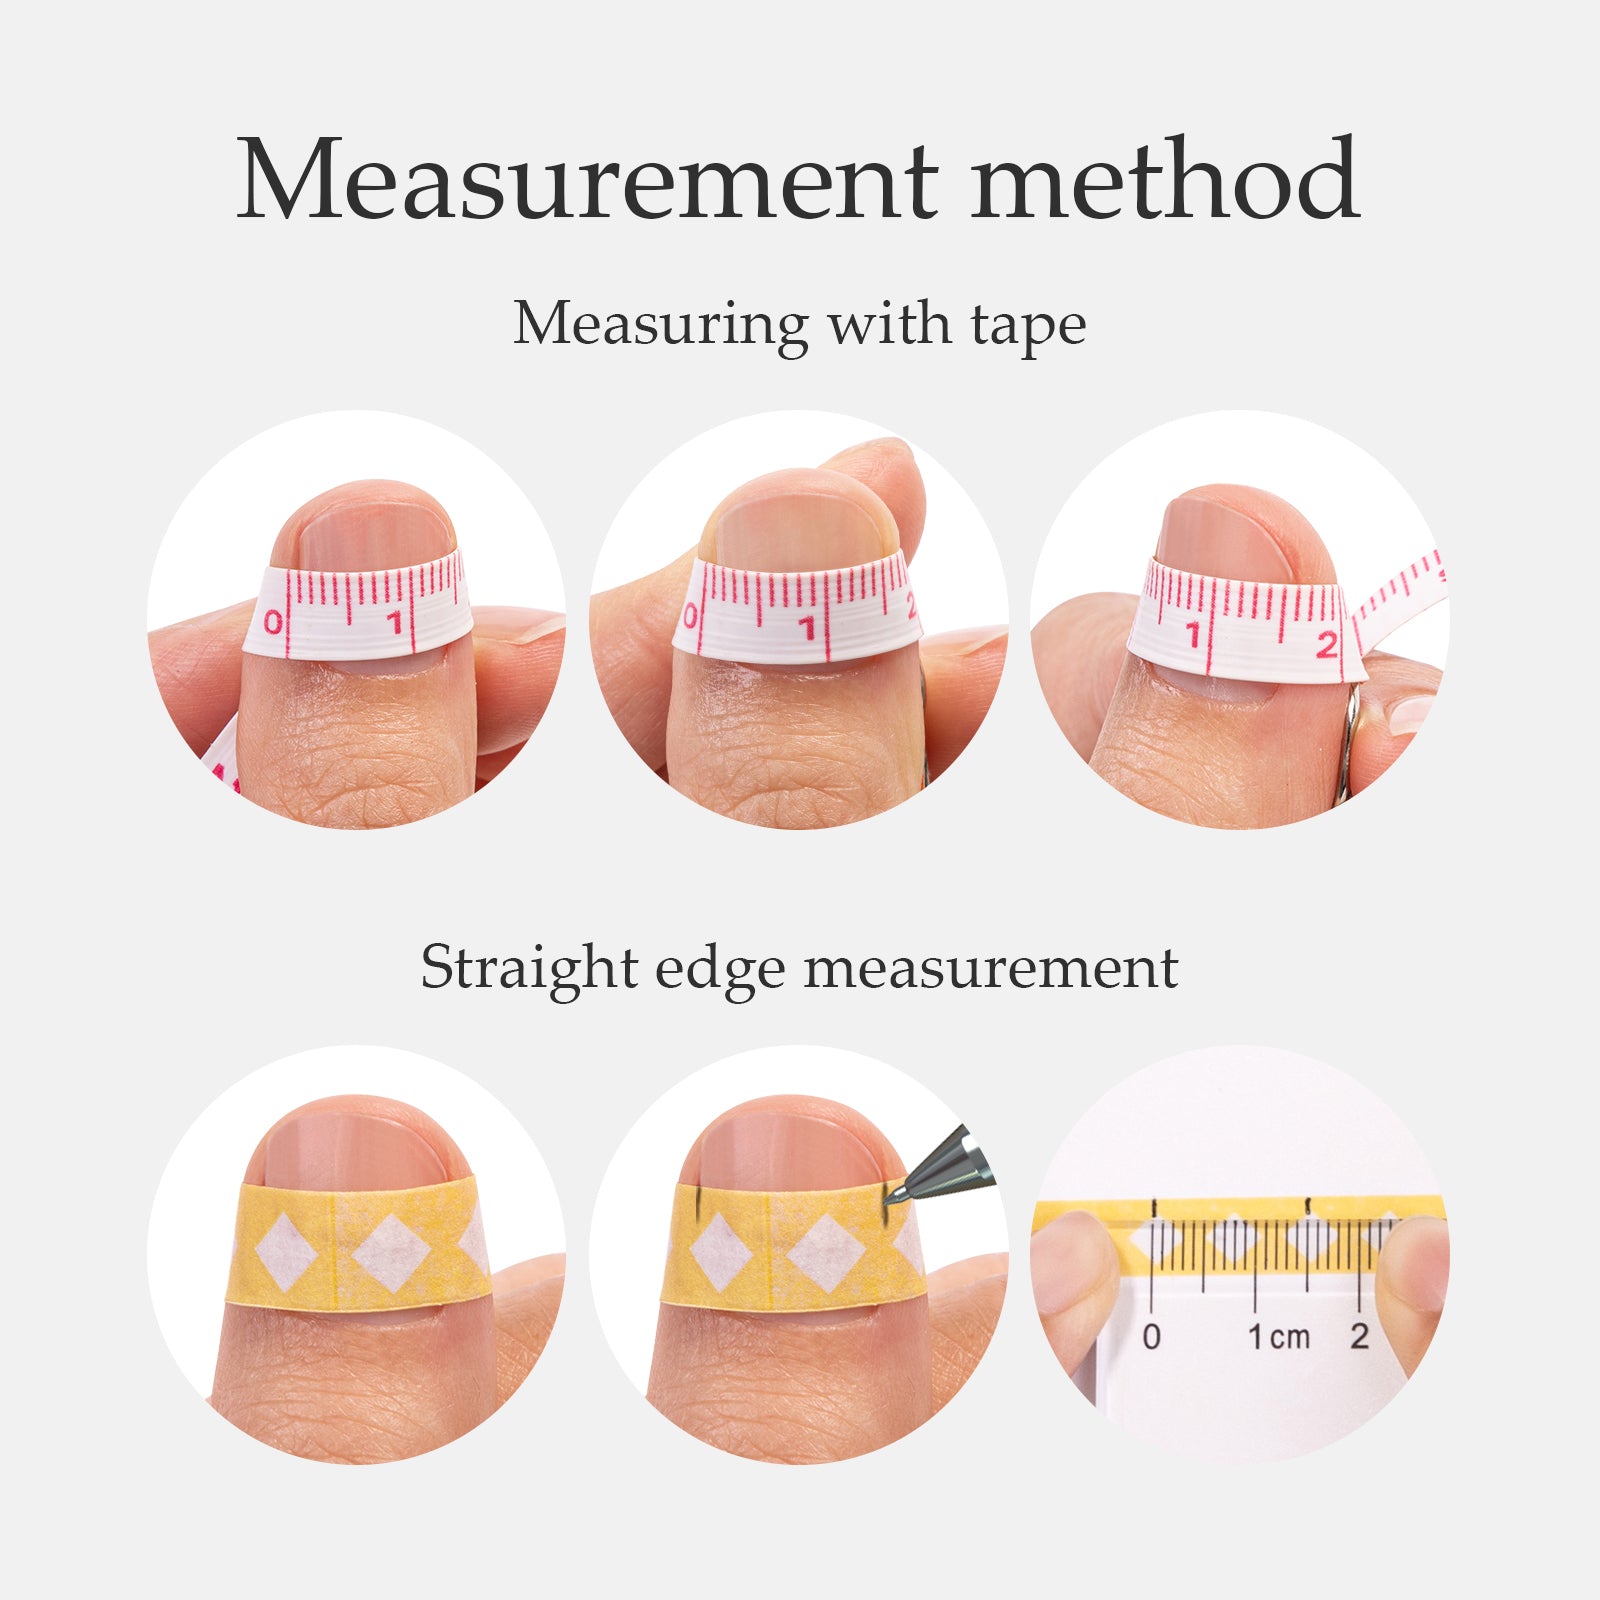 Measurement method